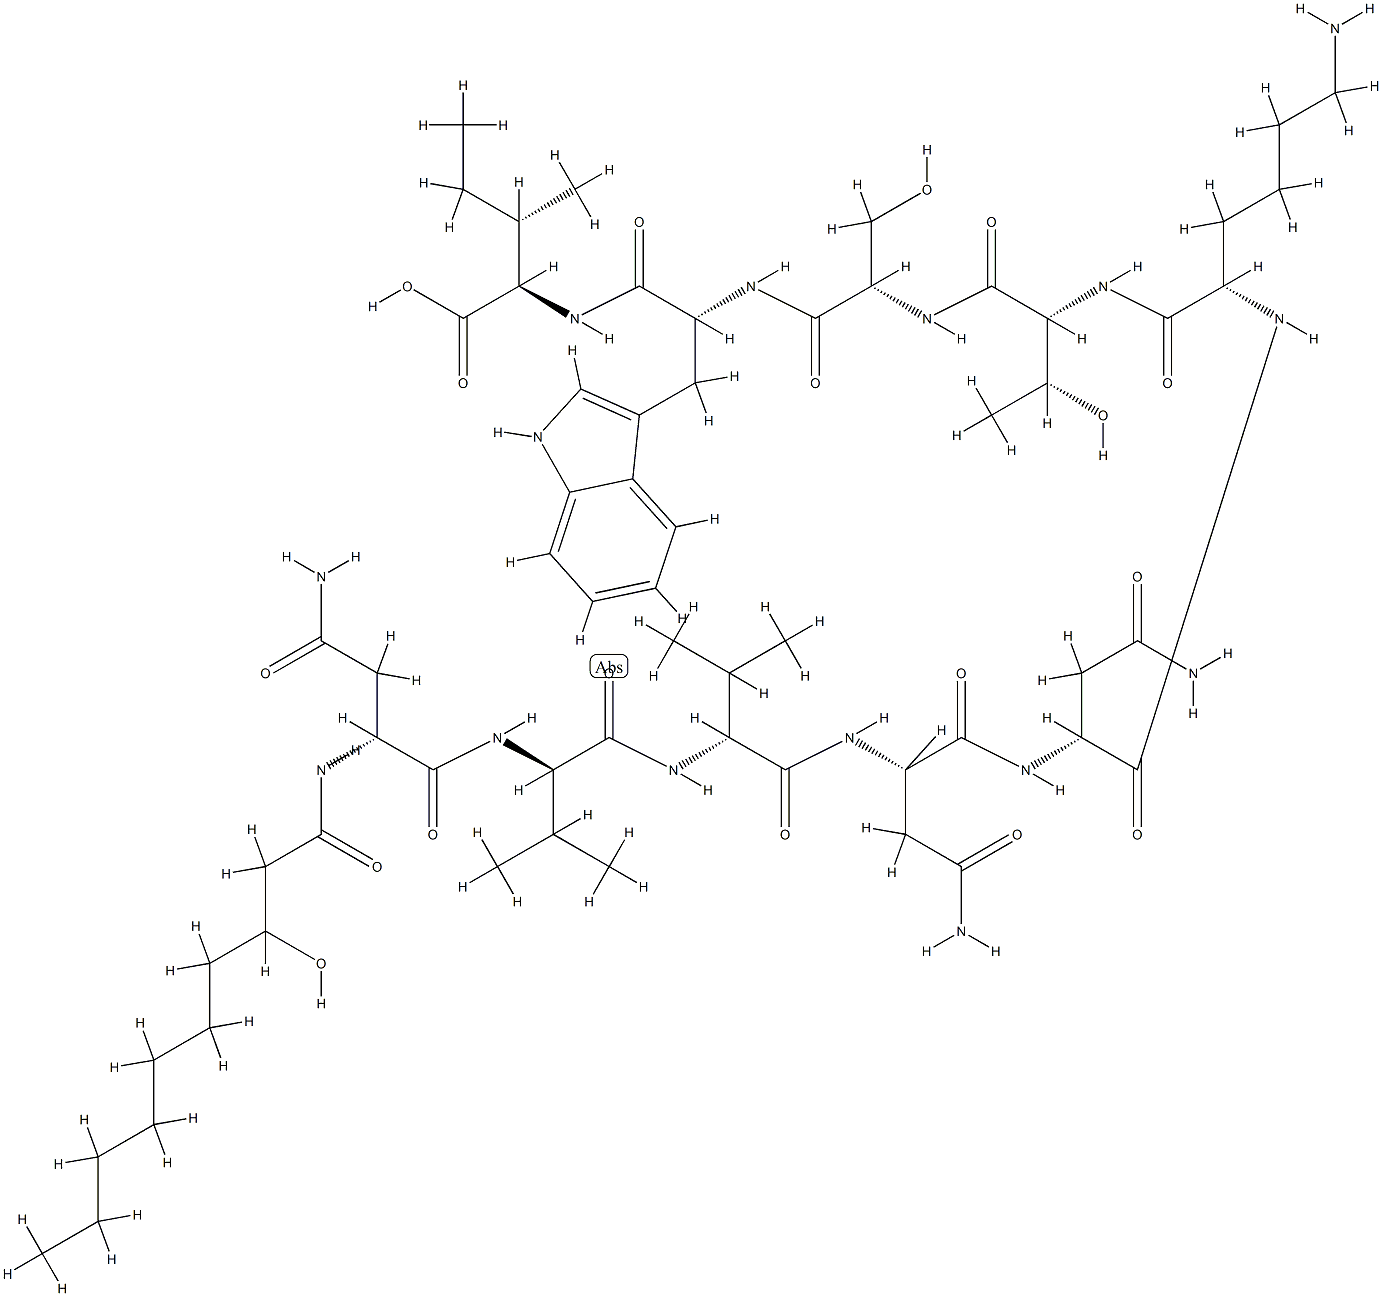 62031-44-1 N2-(3-Hydroxy-9-methyl-1-oxononyl)-D-Asn-D-Val-D-Val-L-Asn-D-Asn-L-Lys-D-aThr-L-Ser-D-Trp-D-aIle-OH